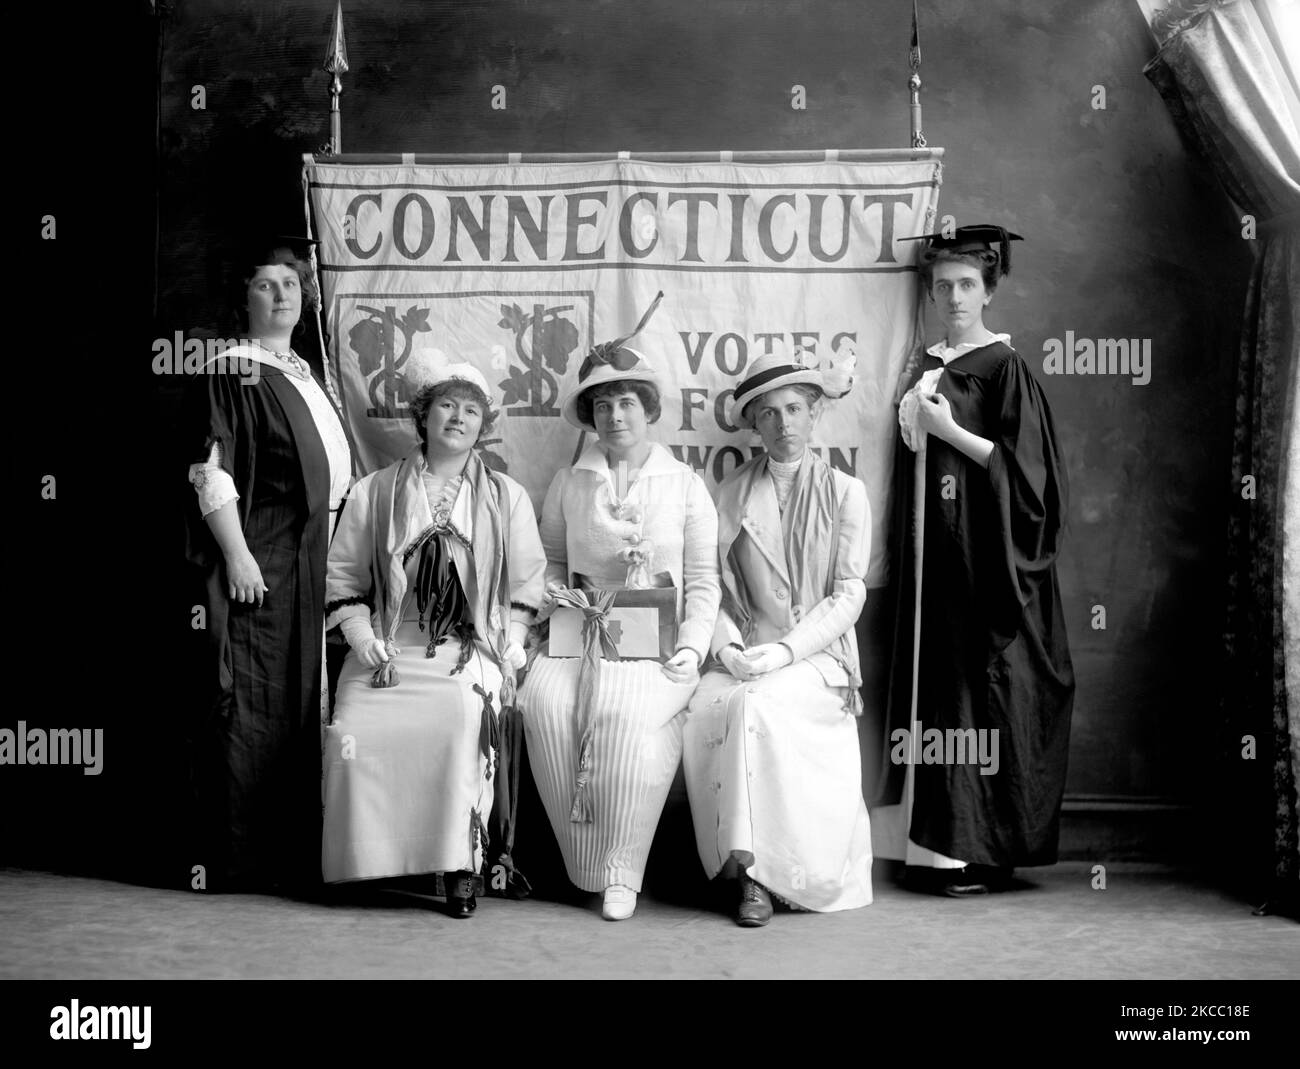 Connecticut Woman Suffrage Association group photo. Stock Photo